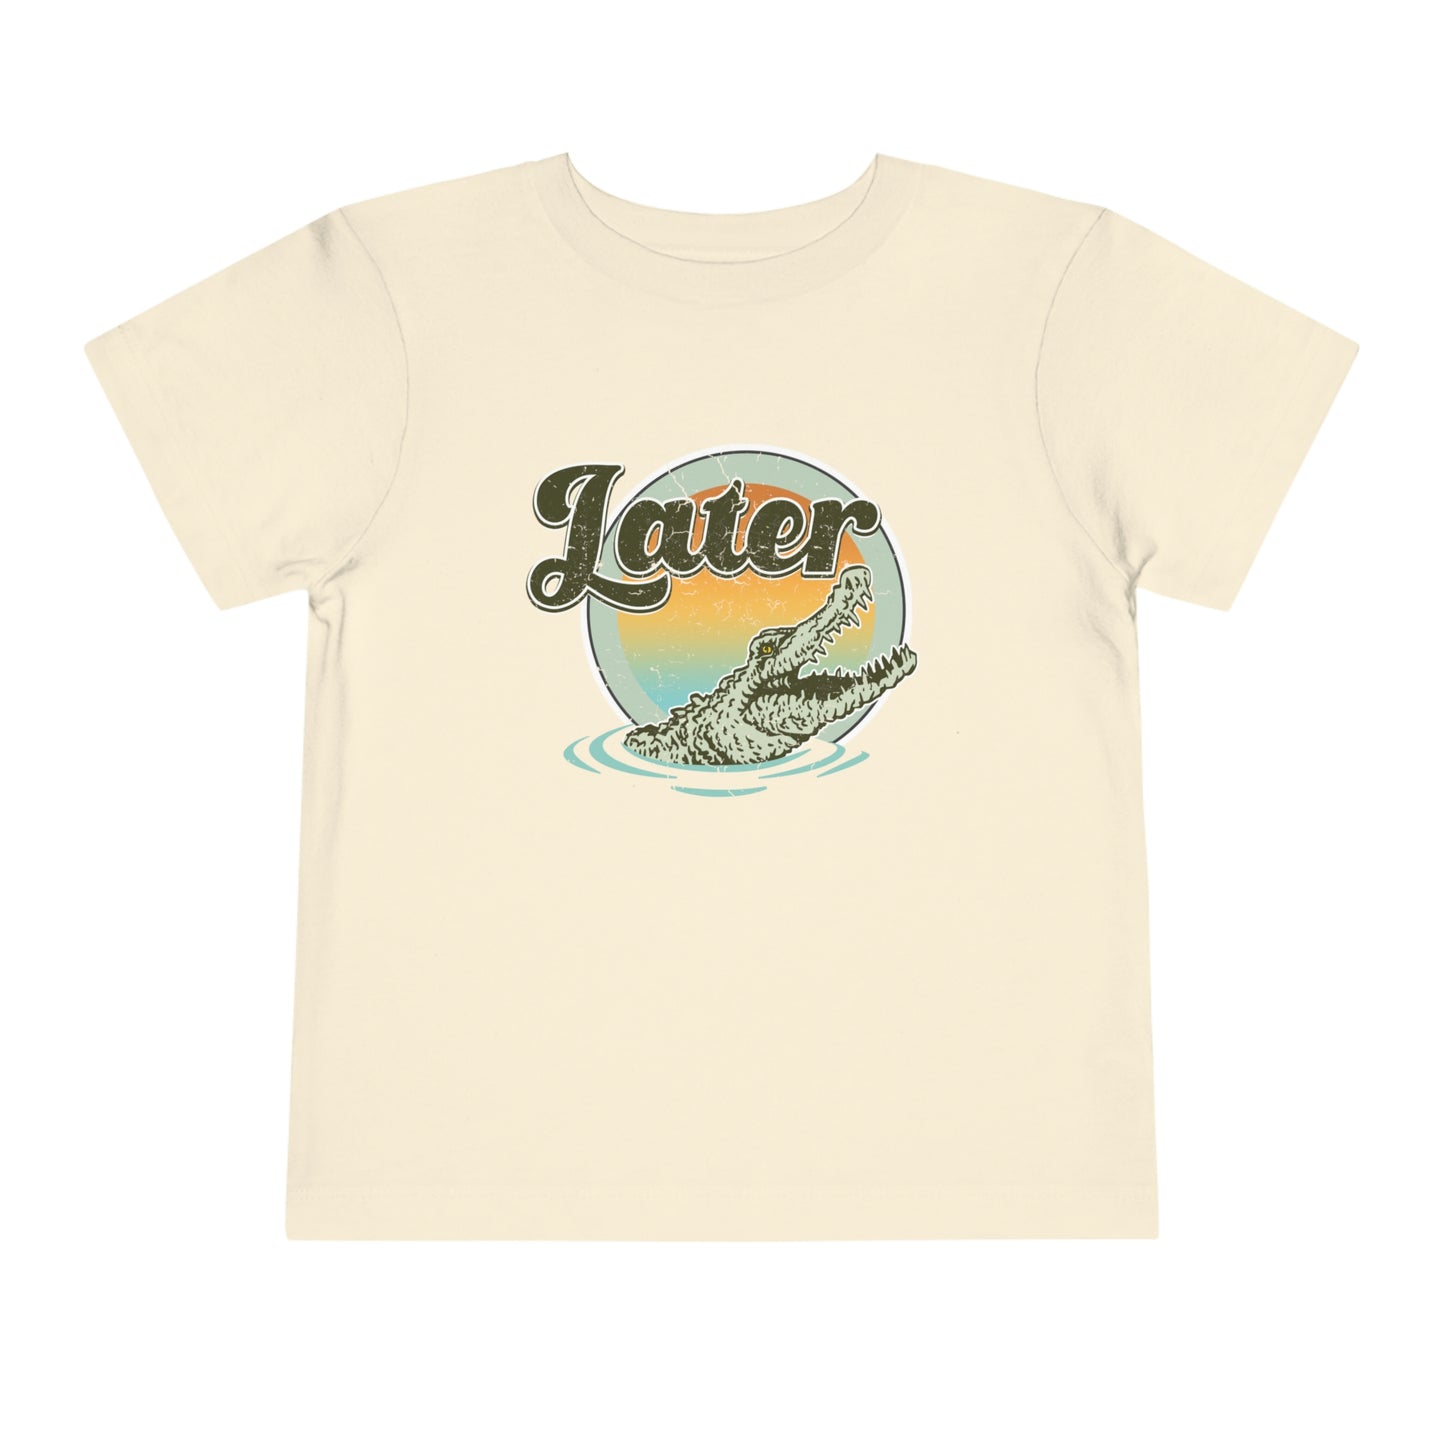 "Later Gator" Toddler Short Sleeve Tee (2T-5T)